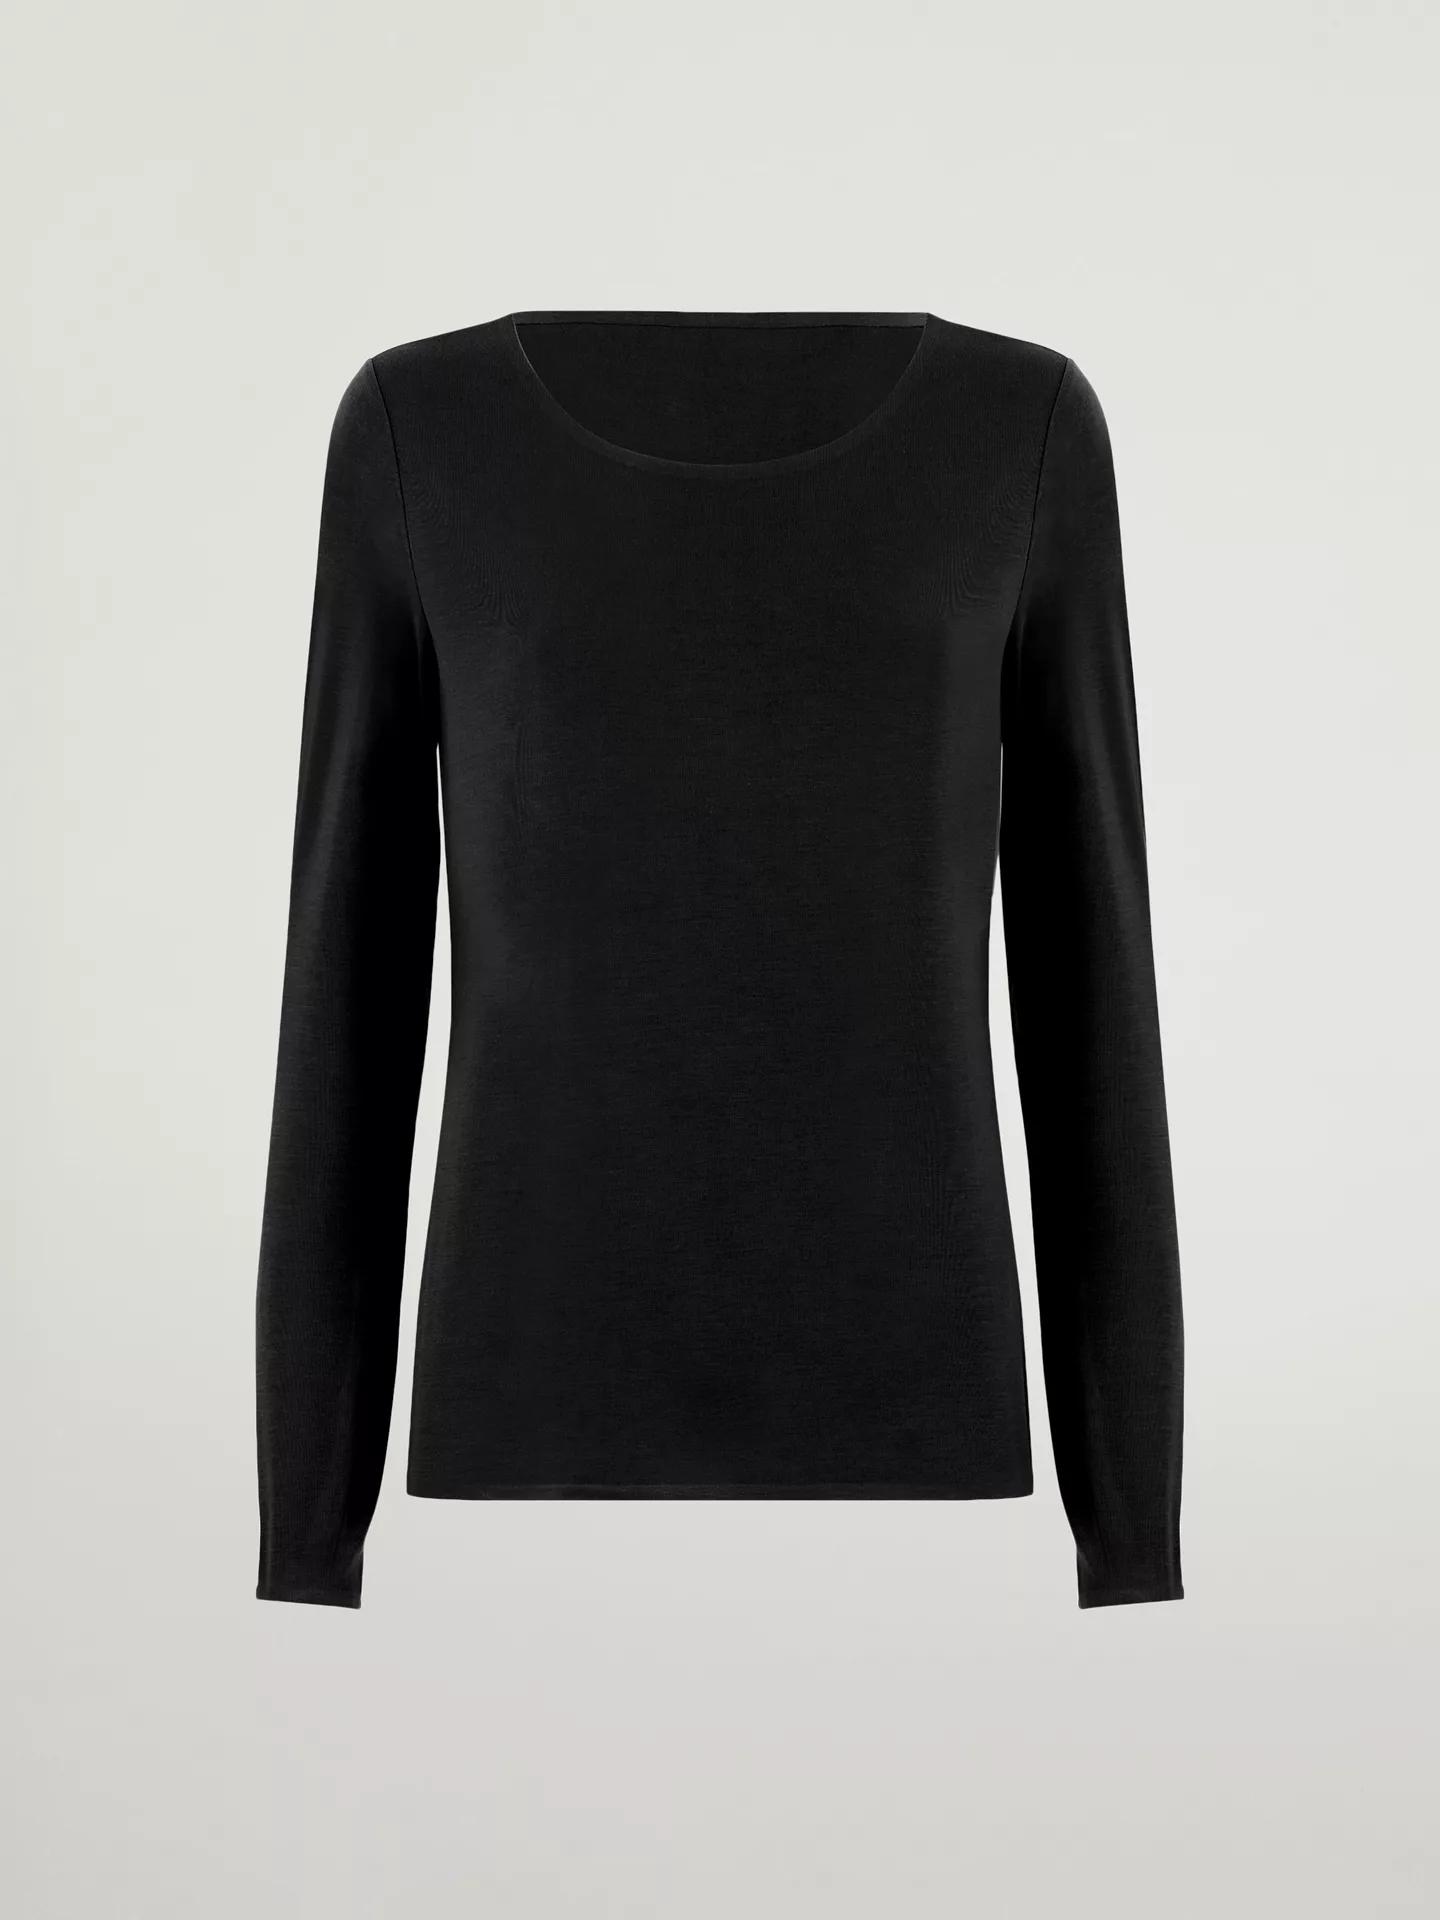 Wolford - Jersey Top Long Sleeves, Frau, black, Größe: M günstig online kaufen